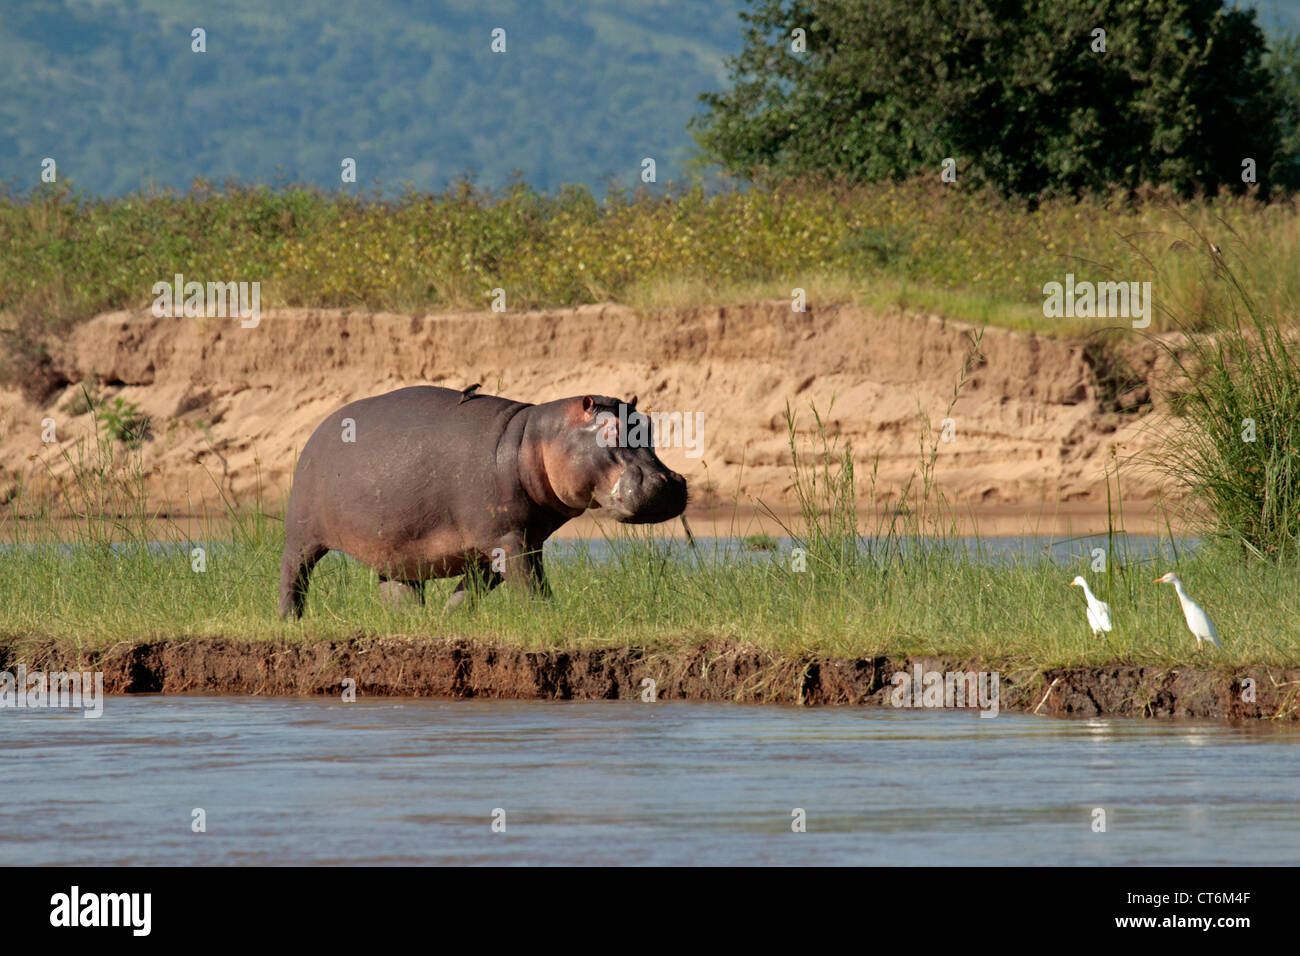 Hippopotamus walking on river bank Stock Photo